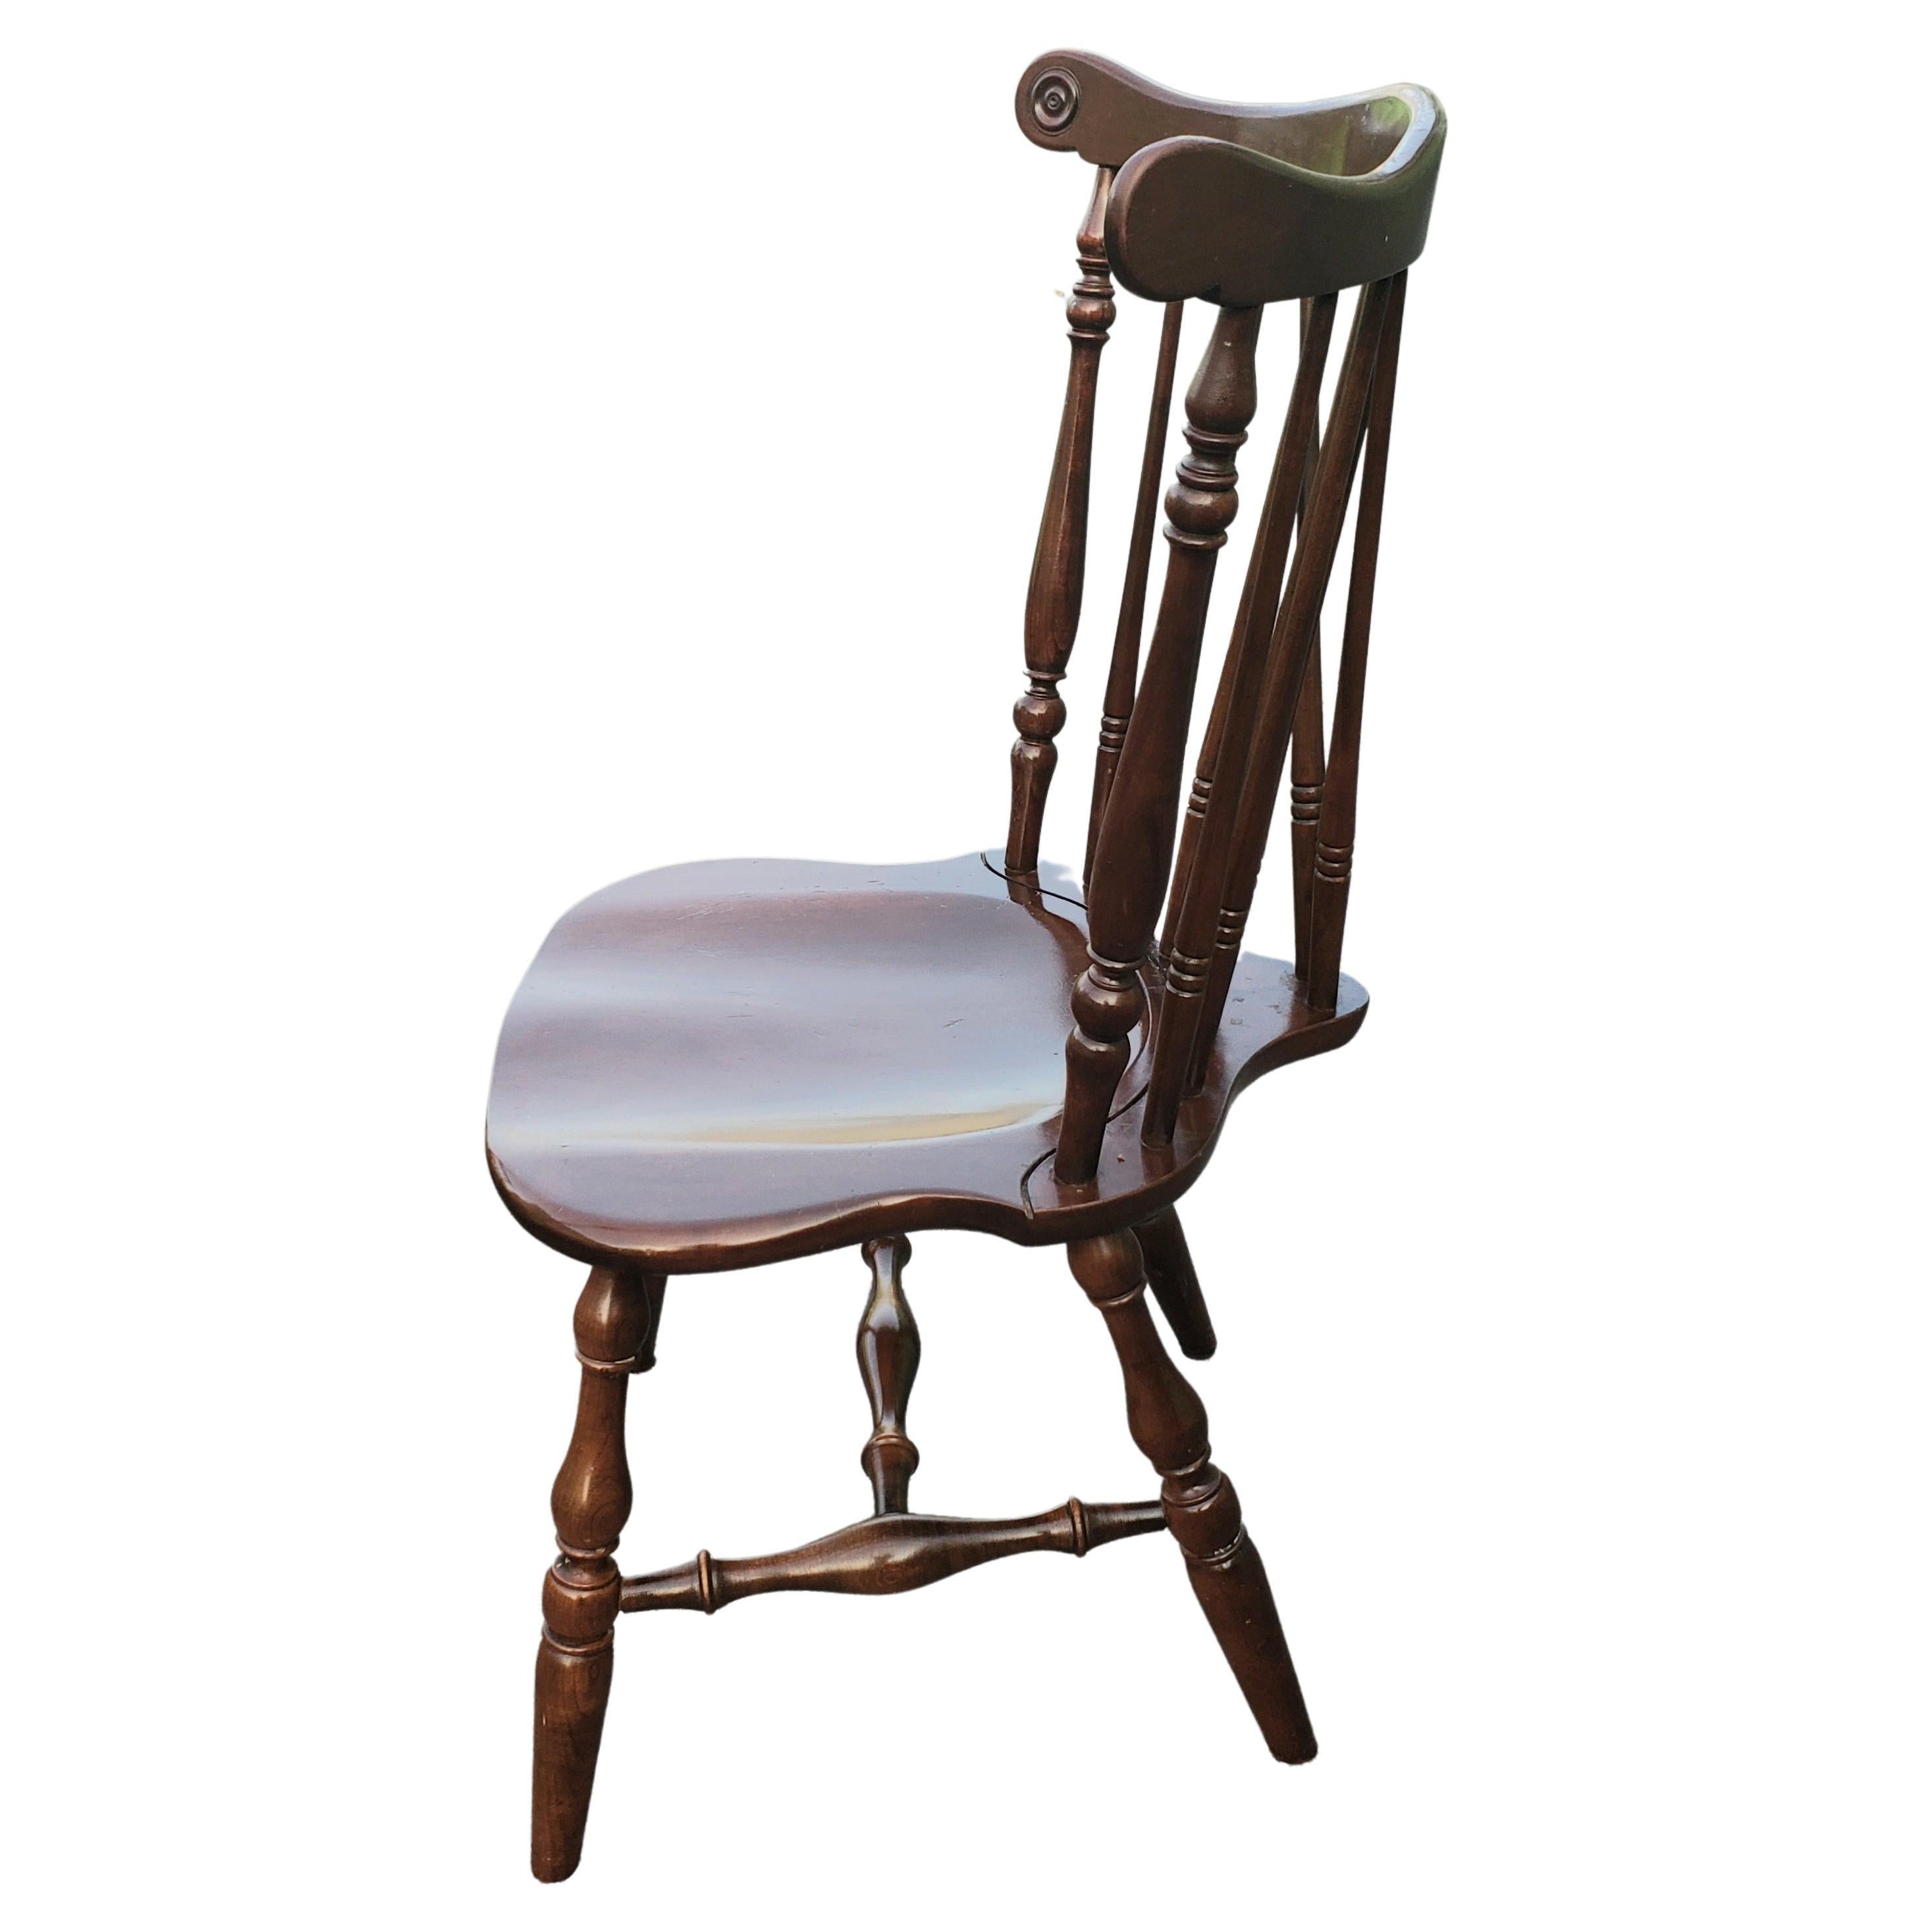 American Kling Furniture Cherry Mahogany Fiddleback Brace Back Windsor Chairs, C. 1940s